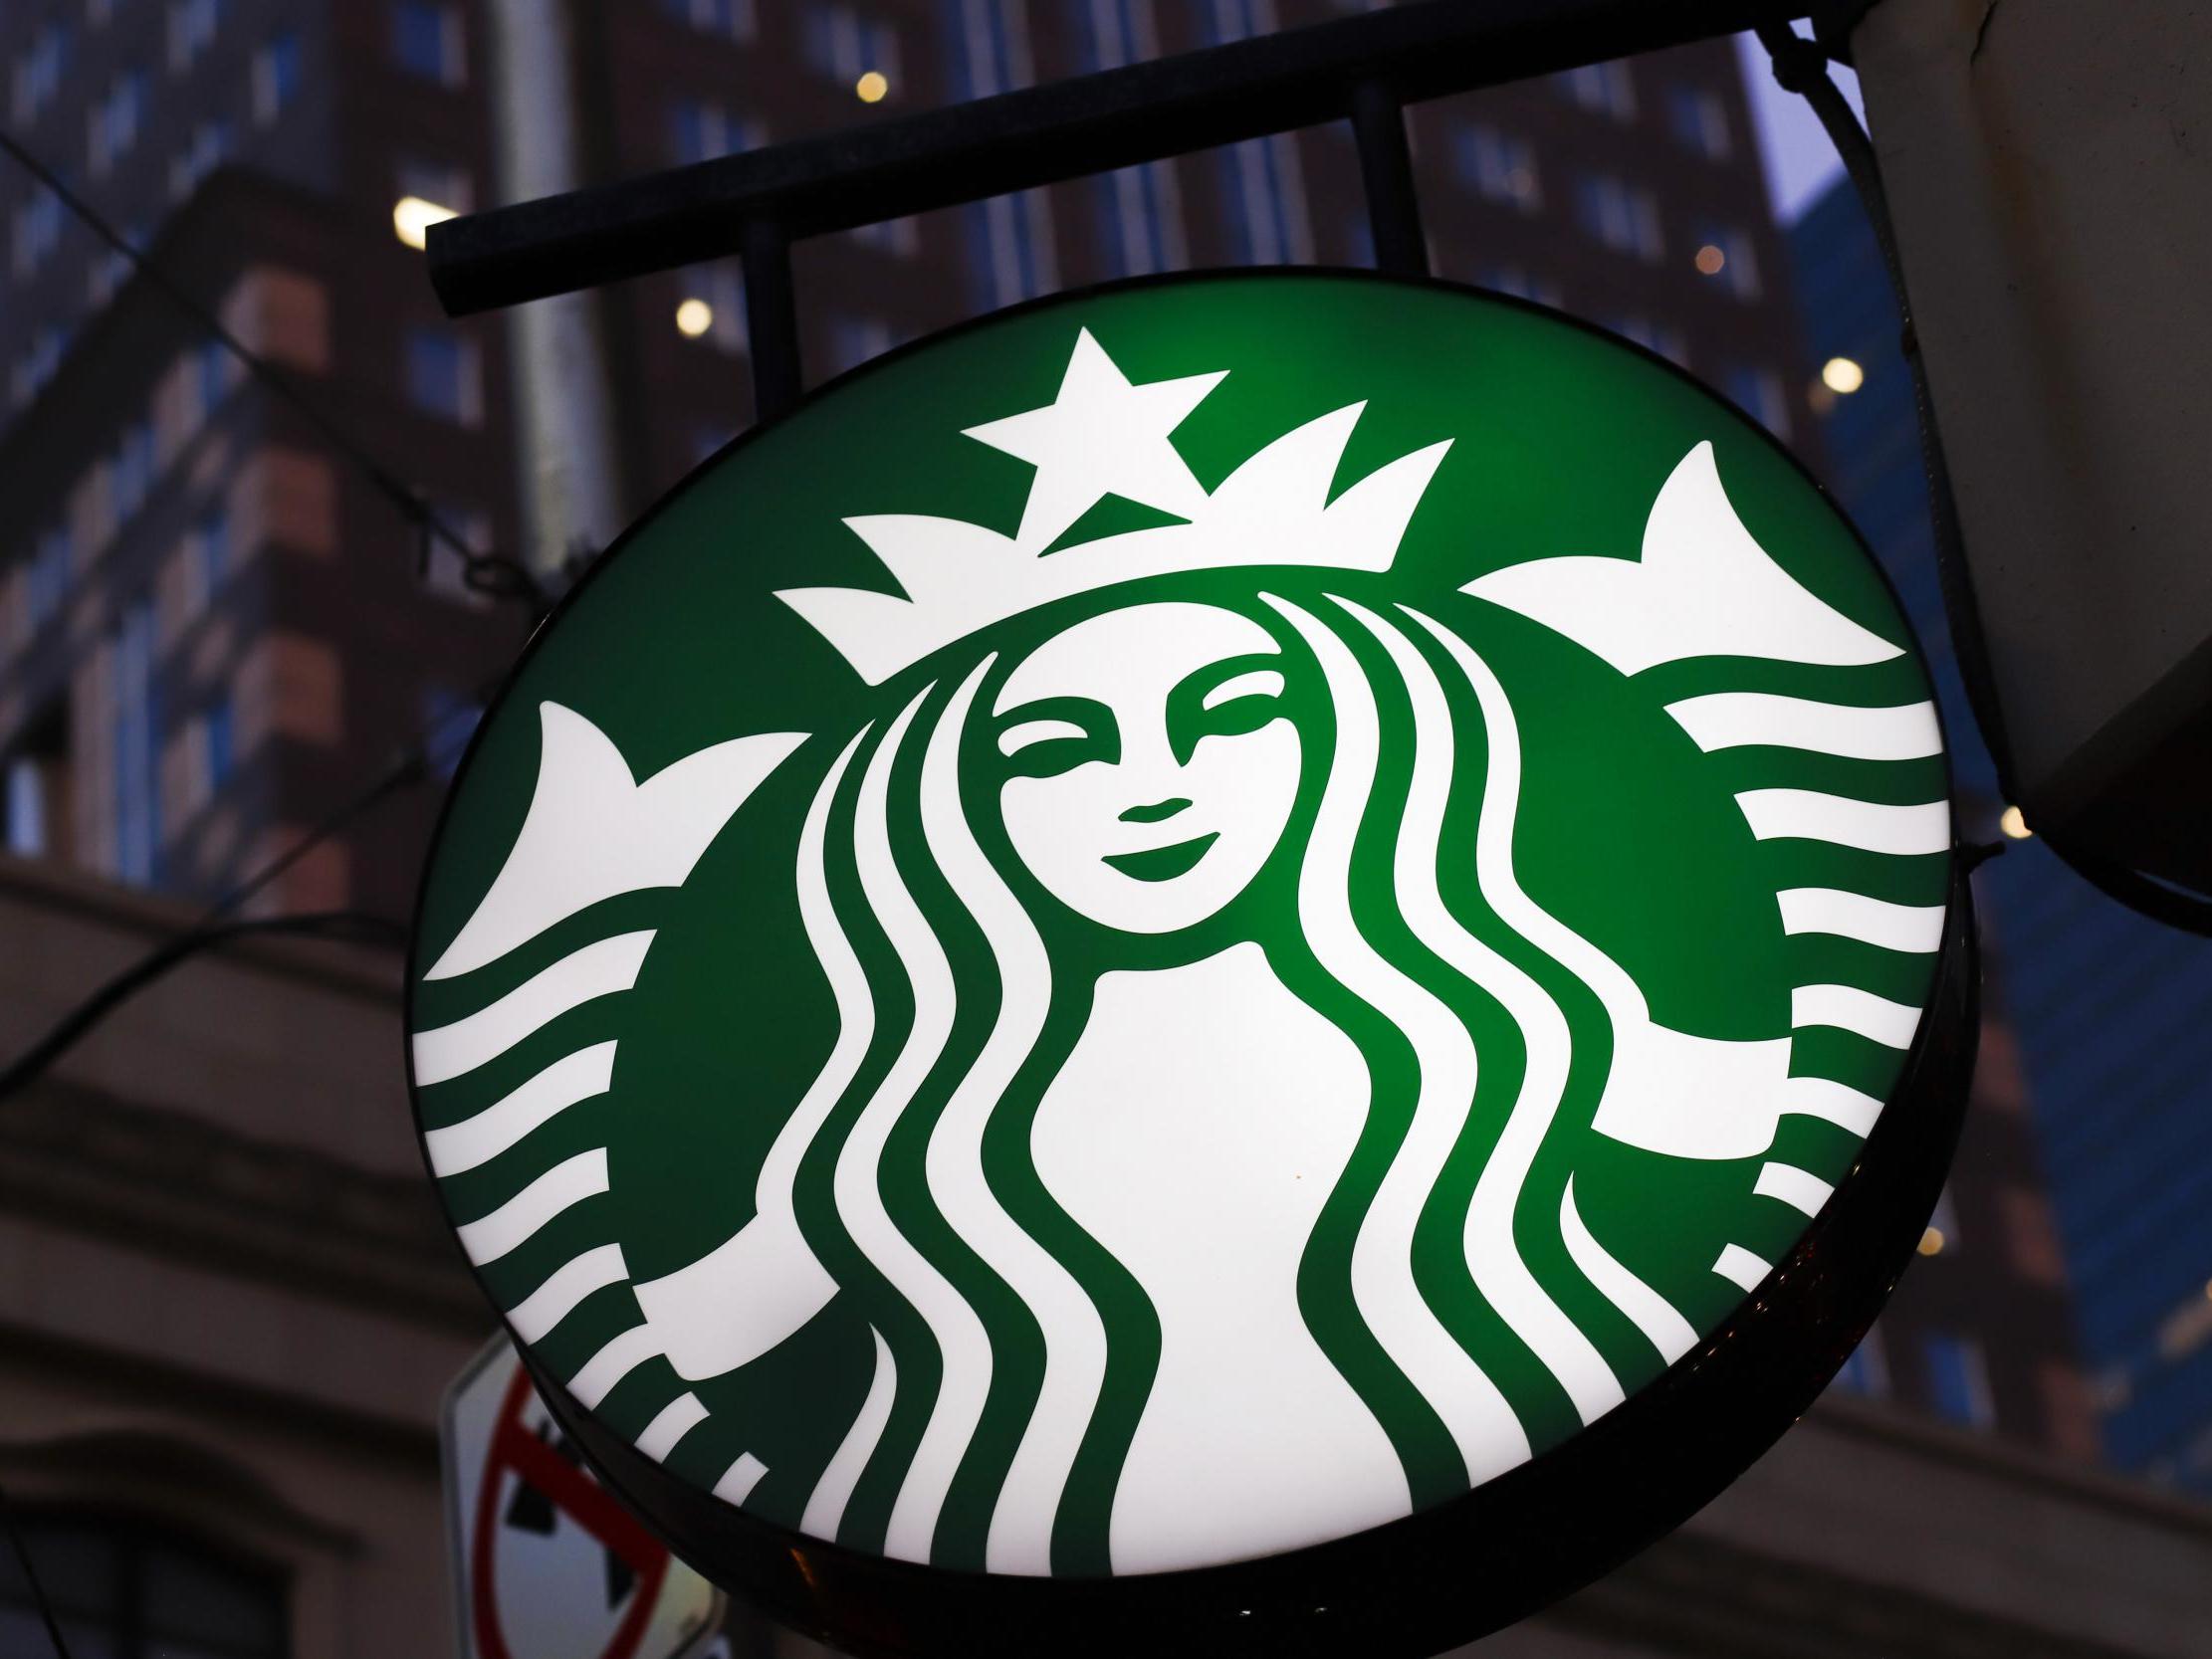 Black Starbucks baristas paid 1.85 less an hour than white colleagues